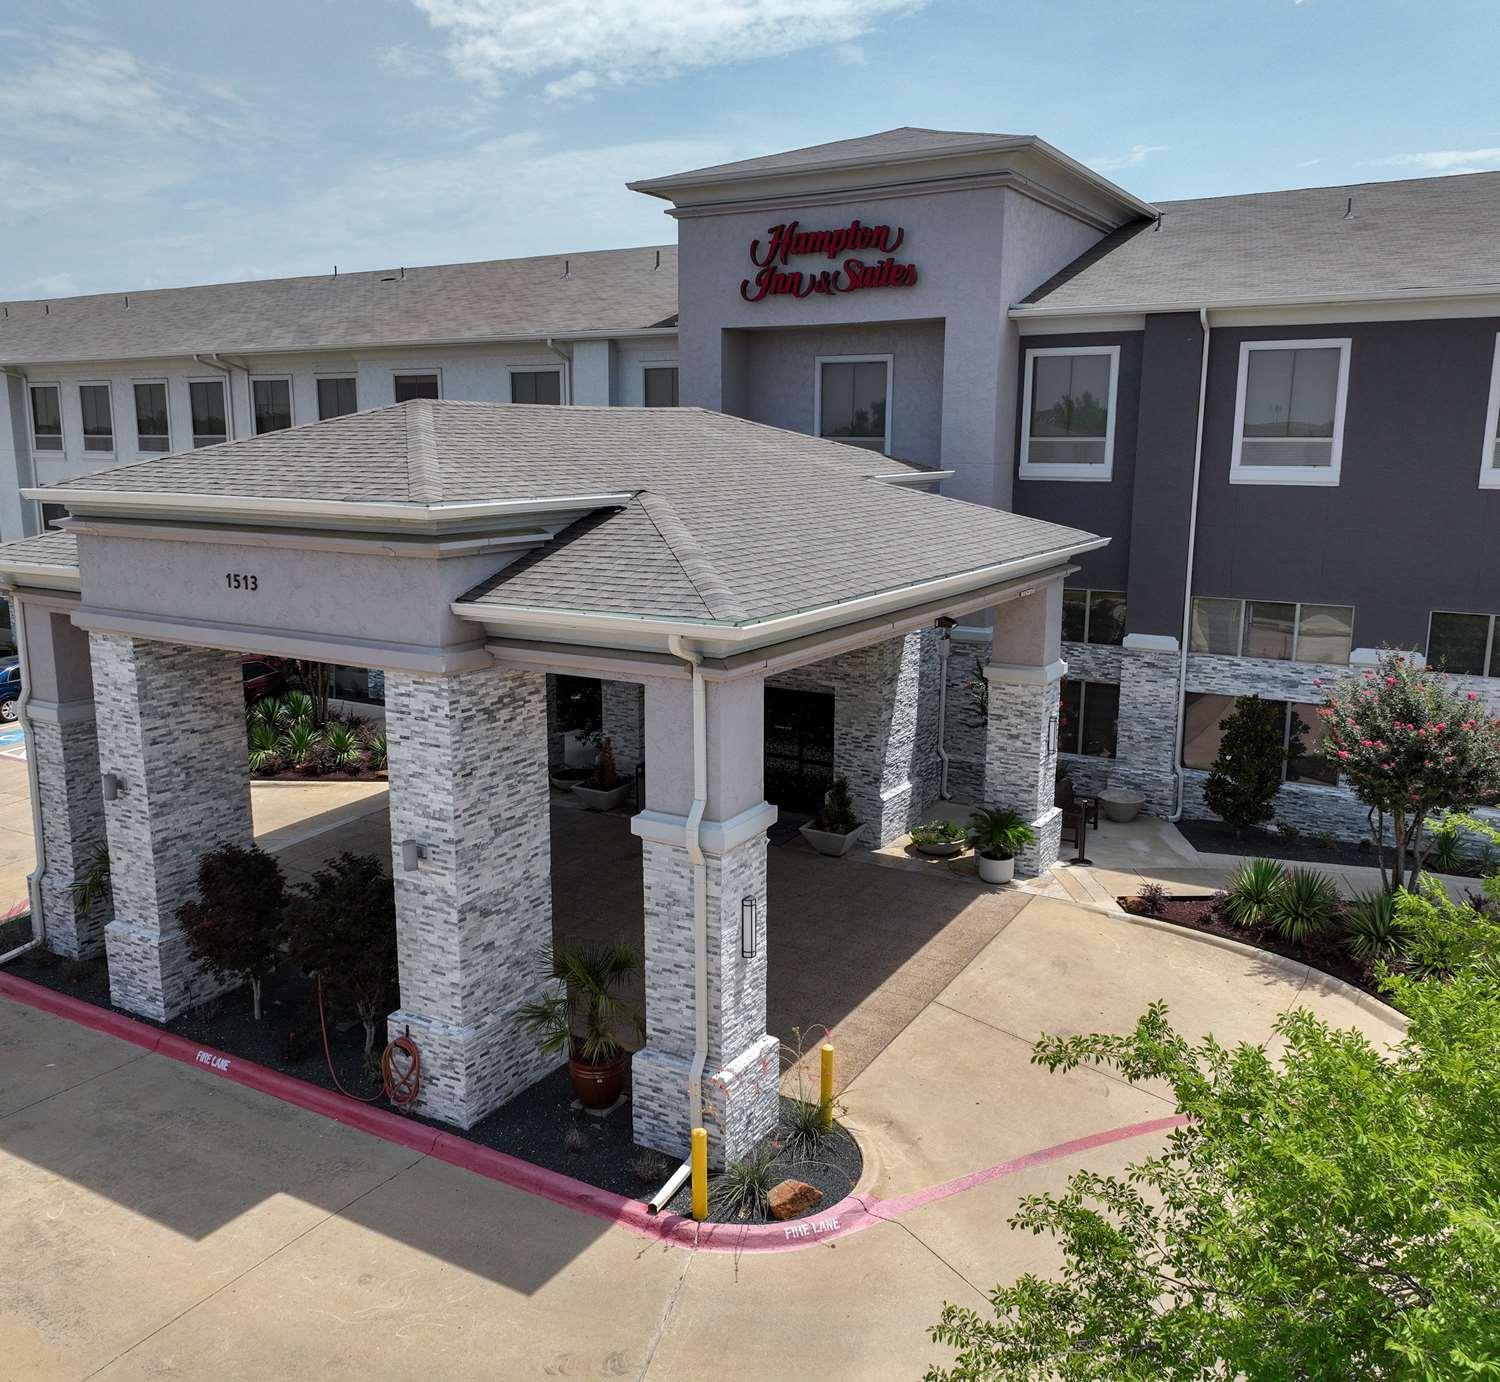 Hampton Inn & Suites Denton in Denton, TX